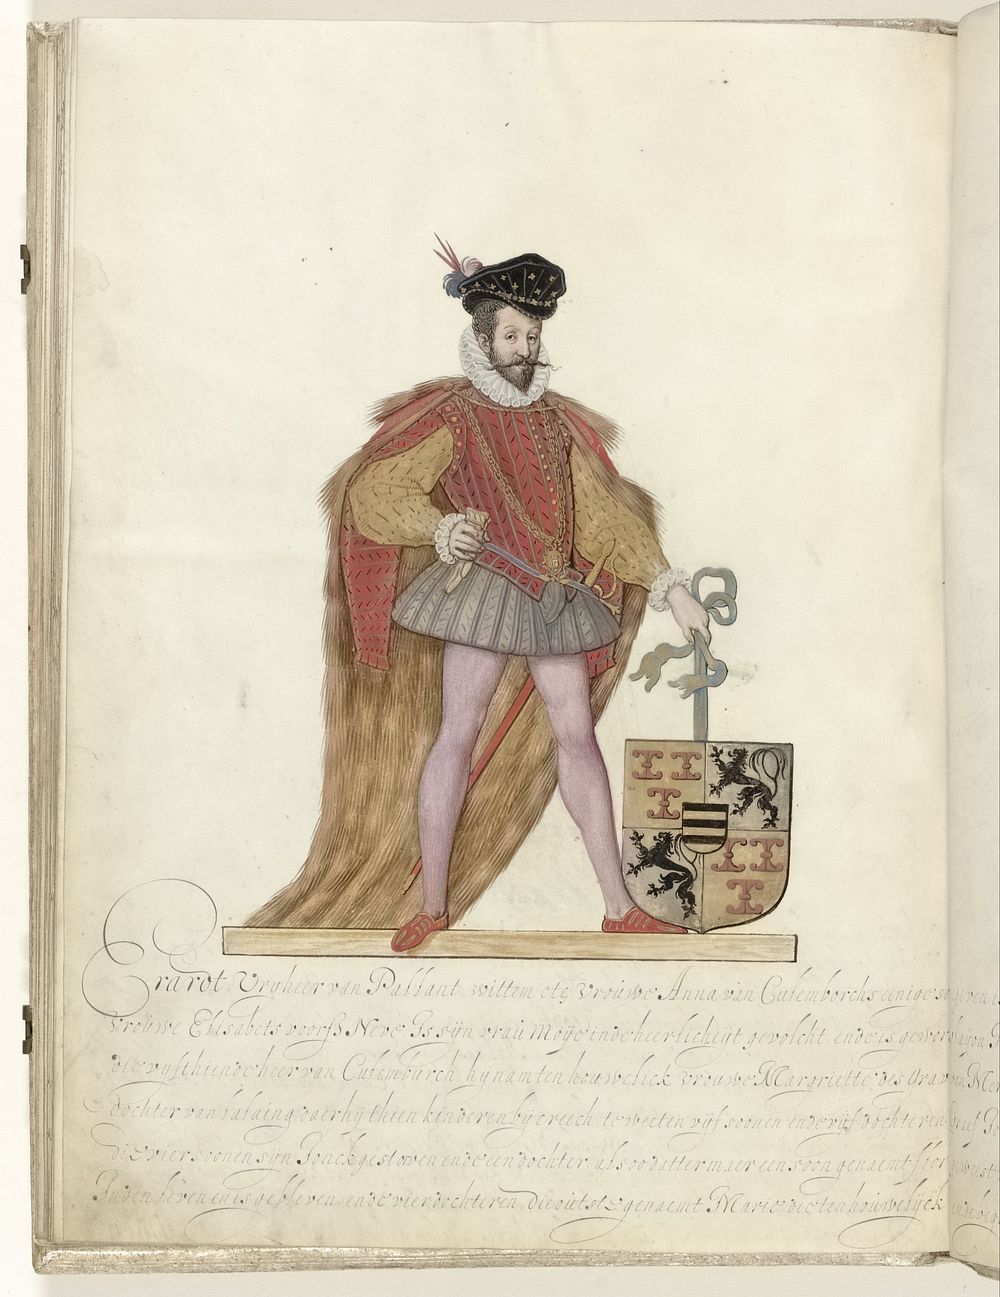 Erard van Pallandt, heer van Culemborg (c. 1600 - c. 1625) by Nicolaes de Kemp and anonymous